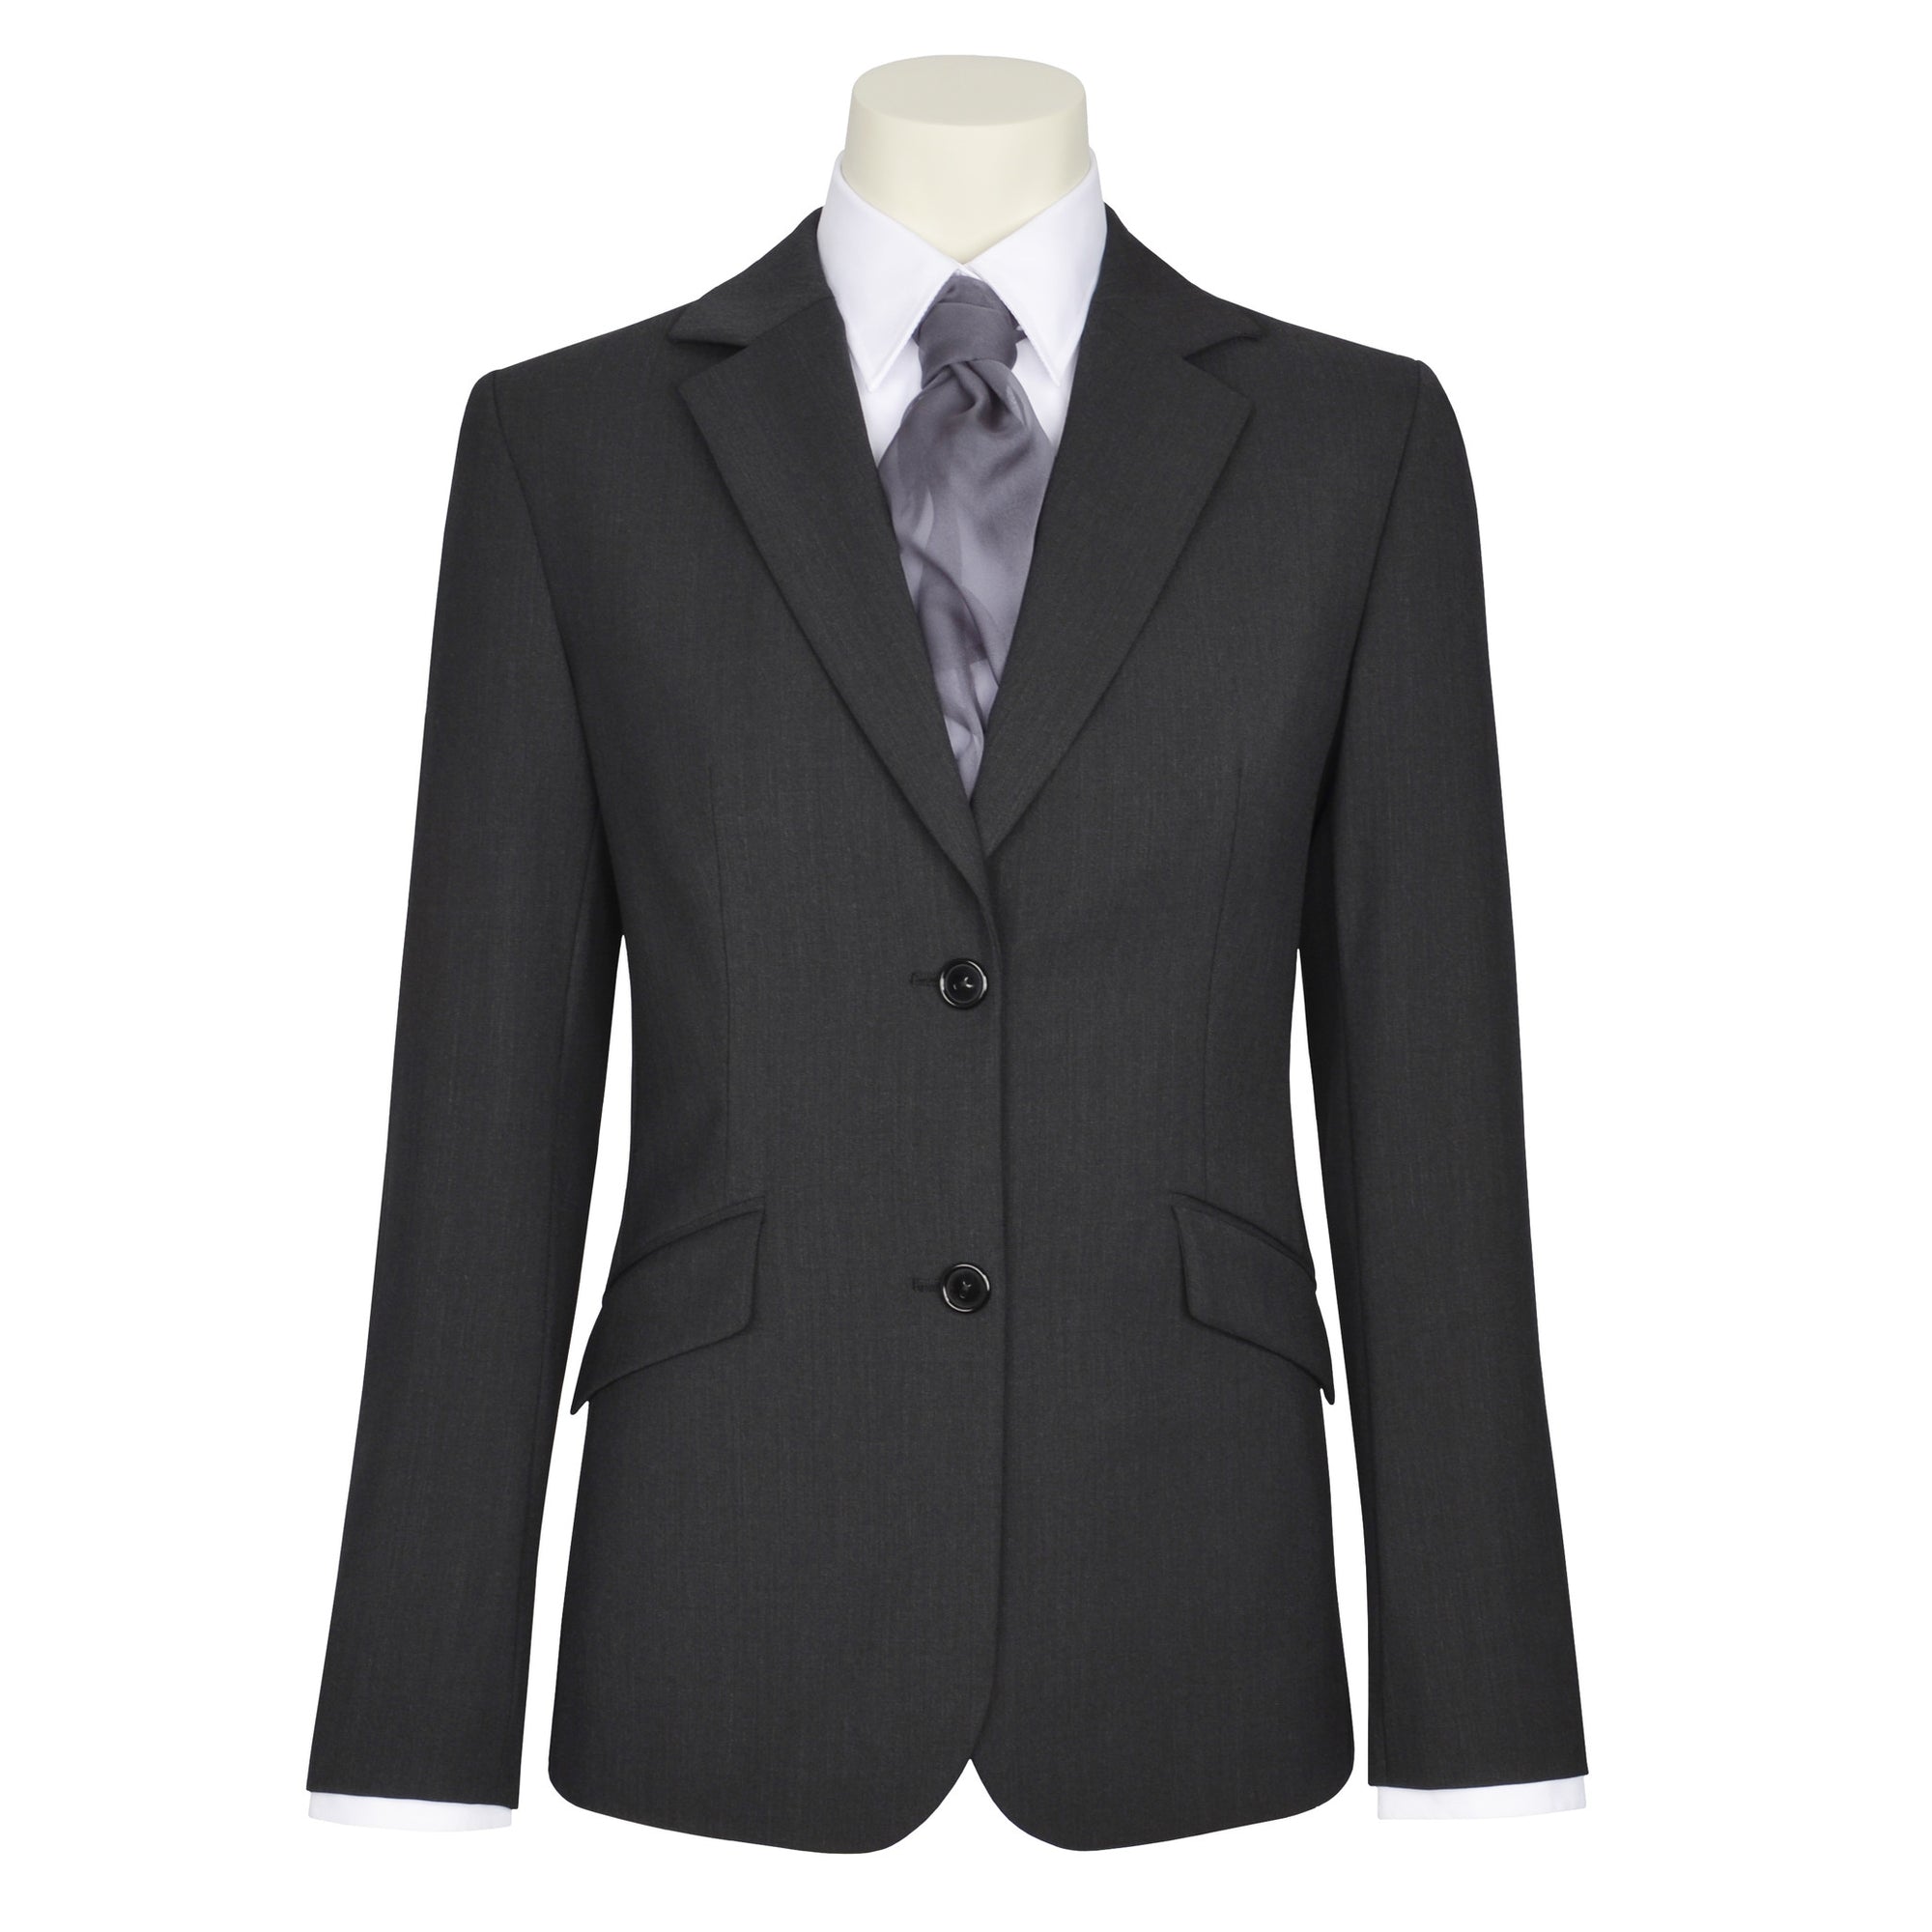 Ladies Suit Jacket - Black Label - peterdrew.com
 - 1